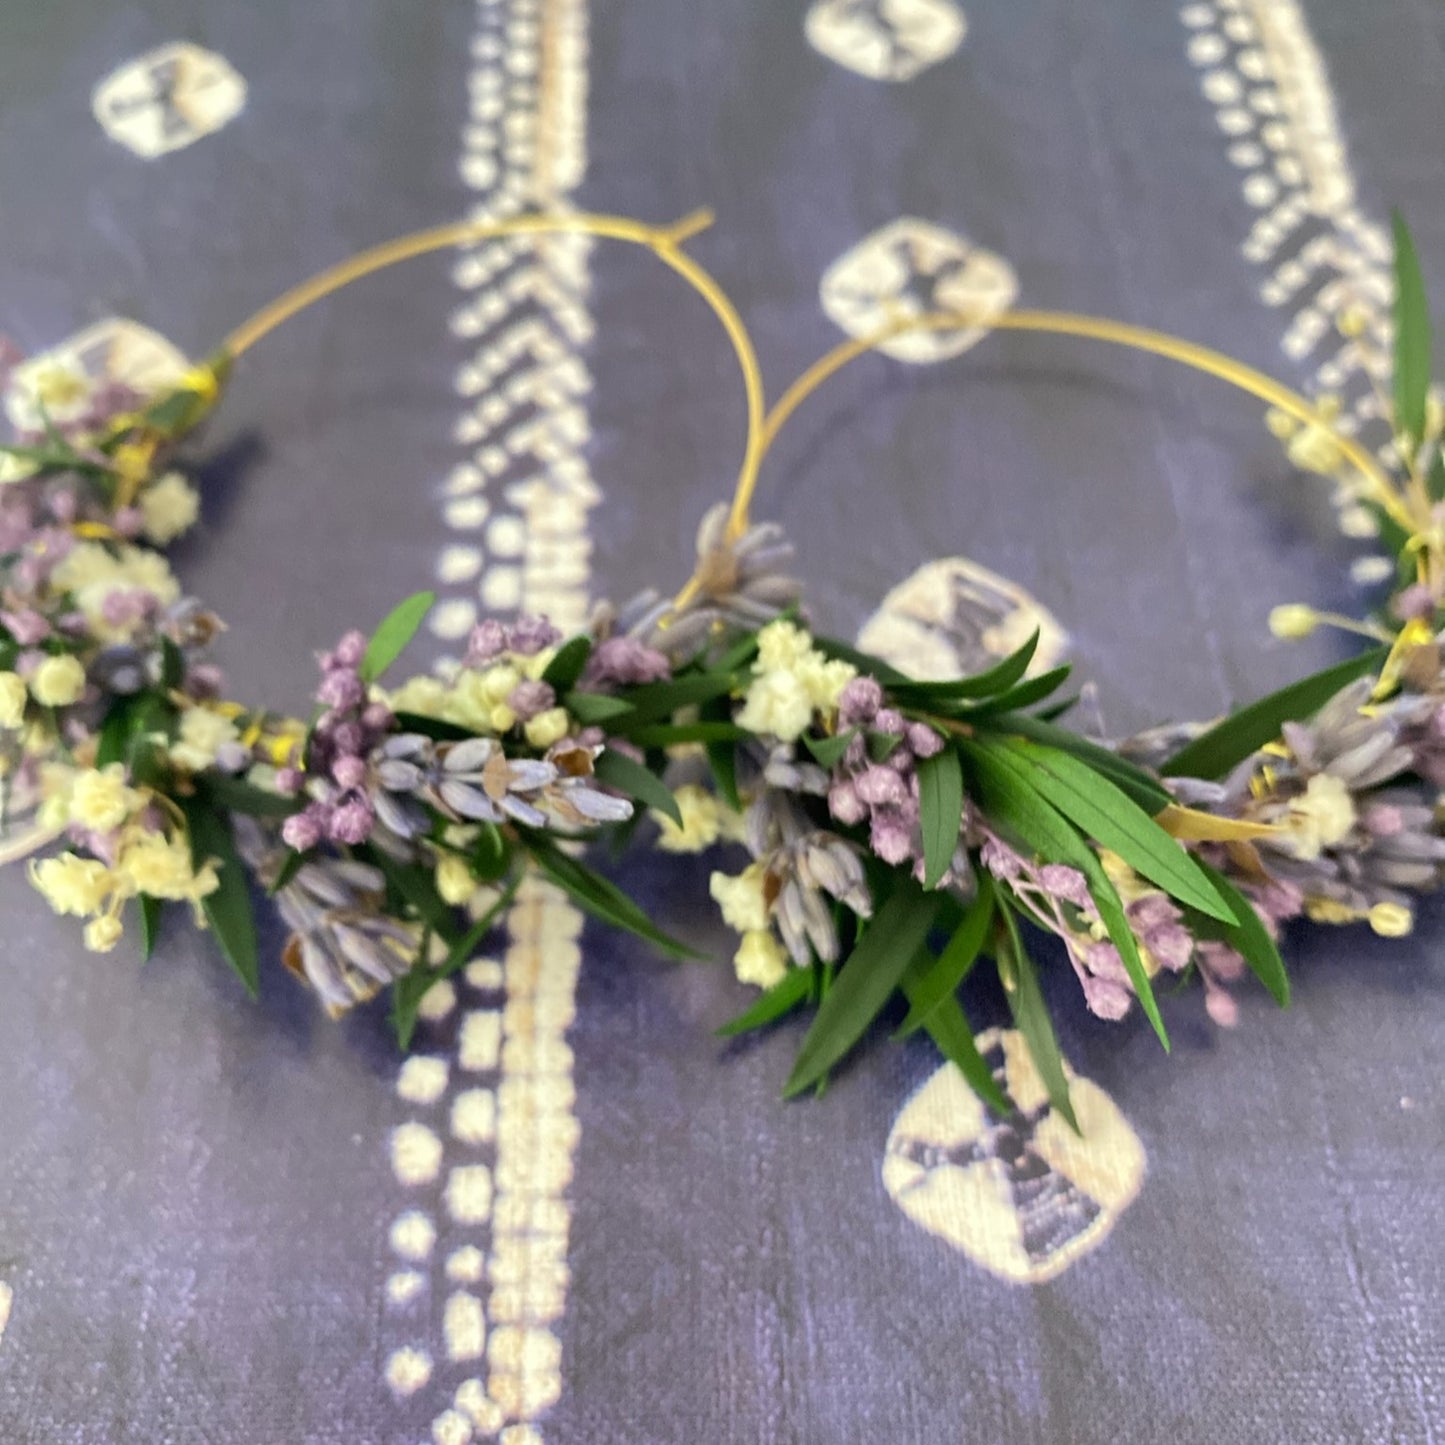 Lavender Earrings